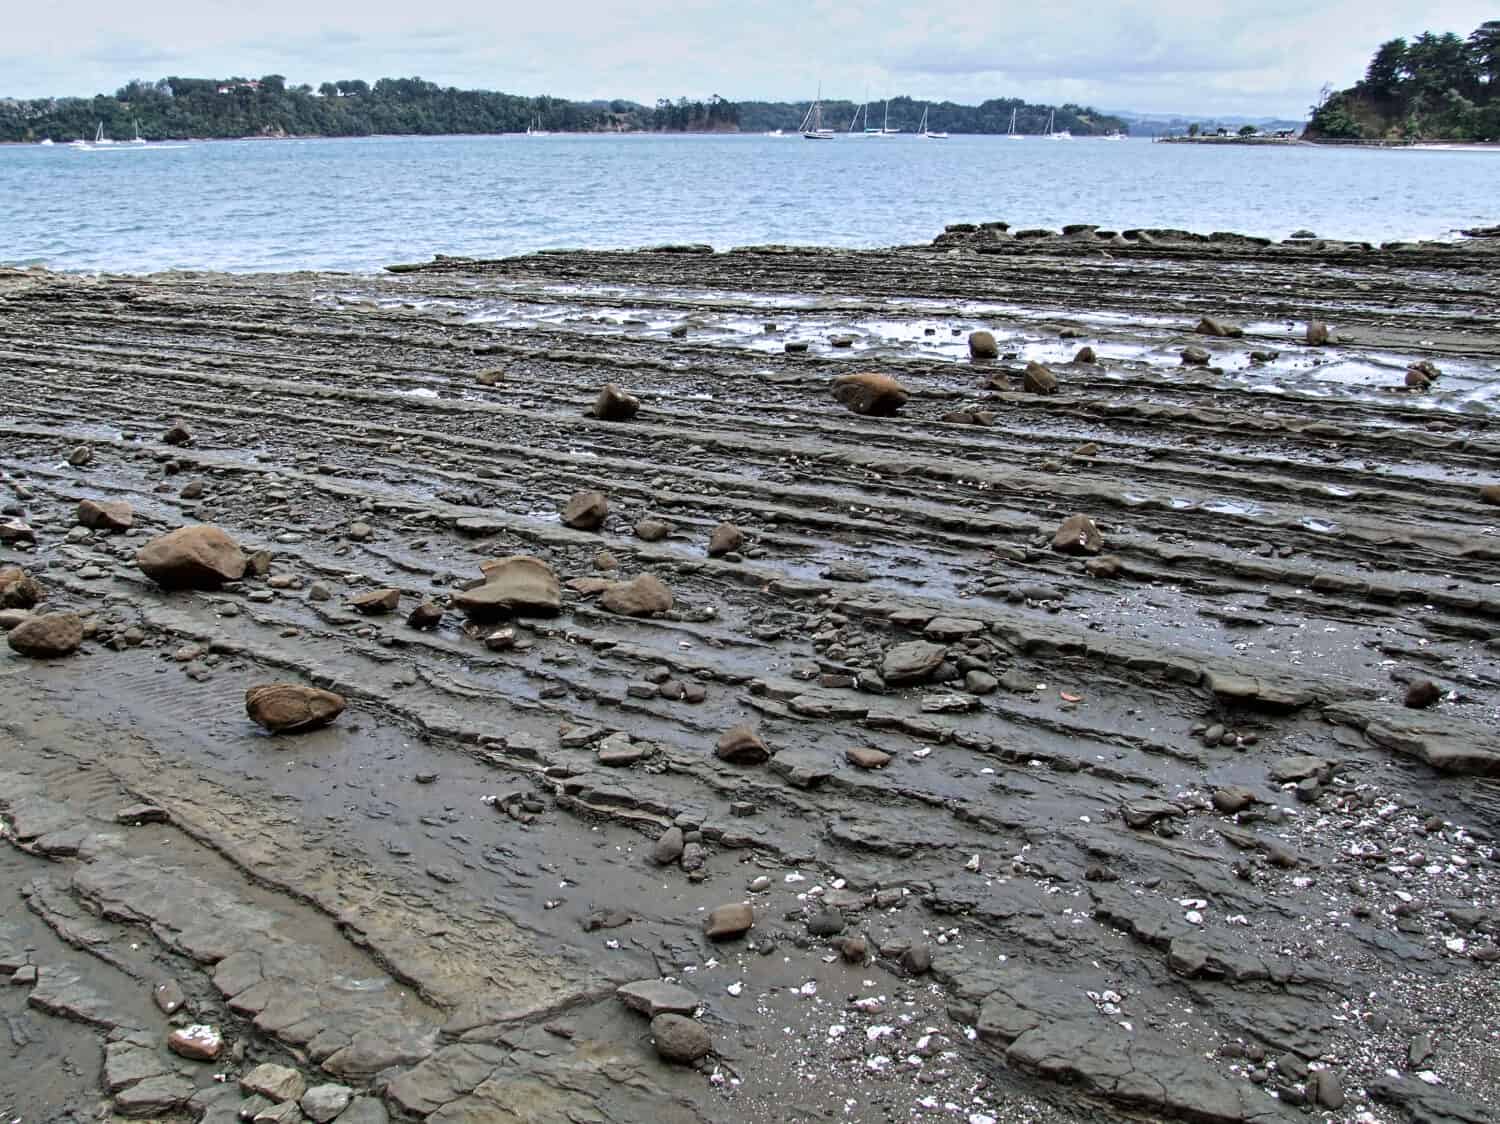 Grey sandstone rocks form stripes across a shore platform. Calm blue ocean and hills lie in the background.